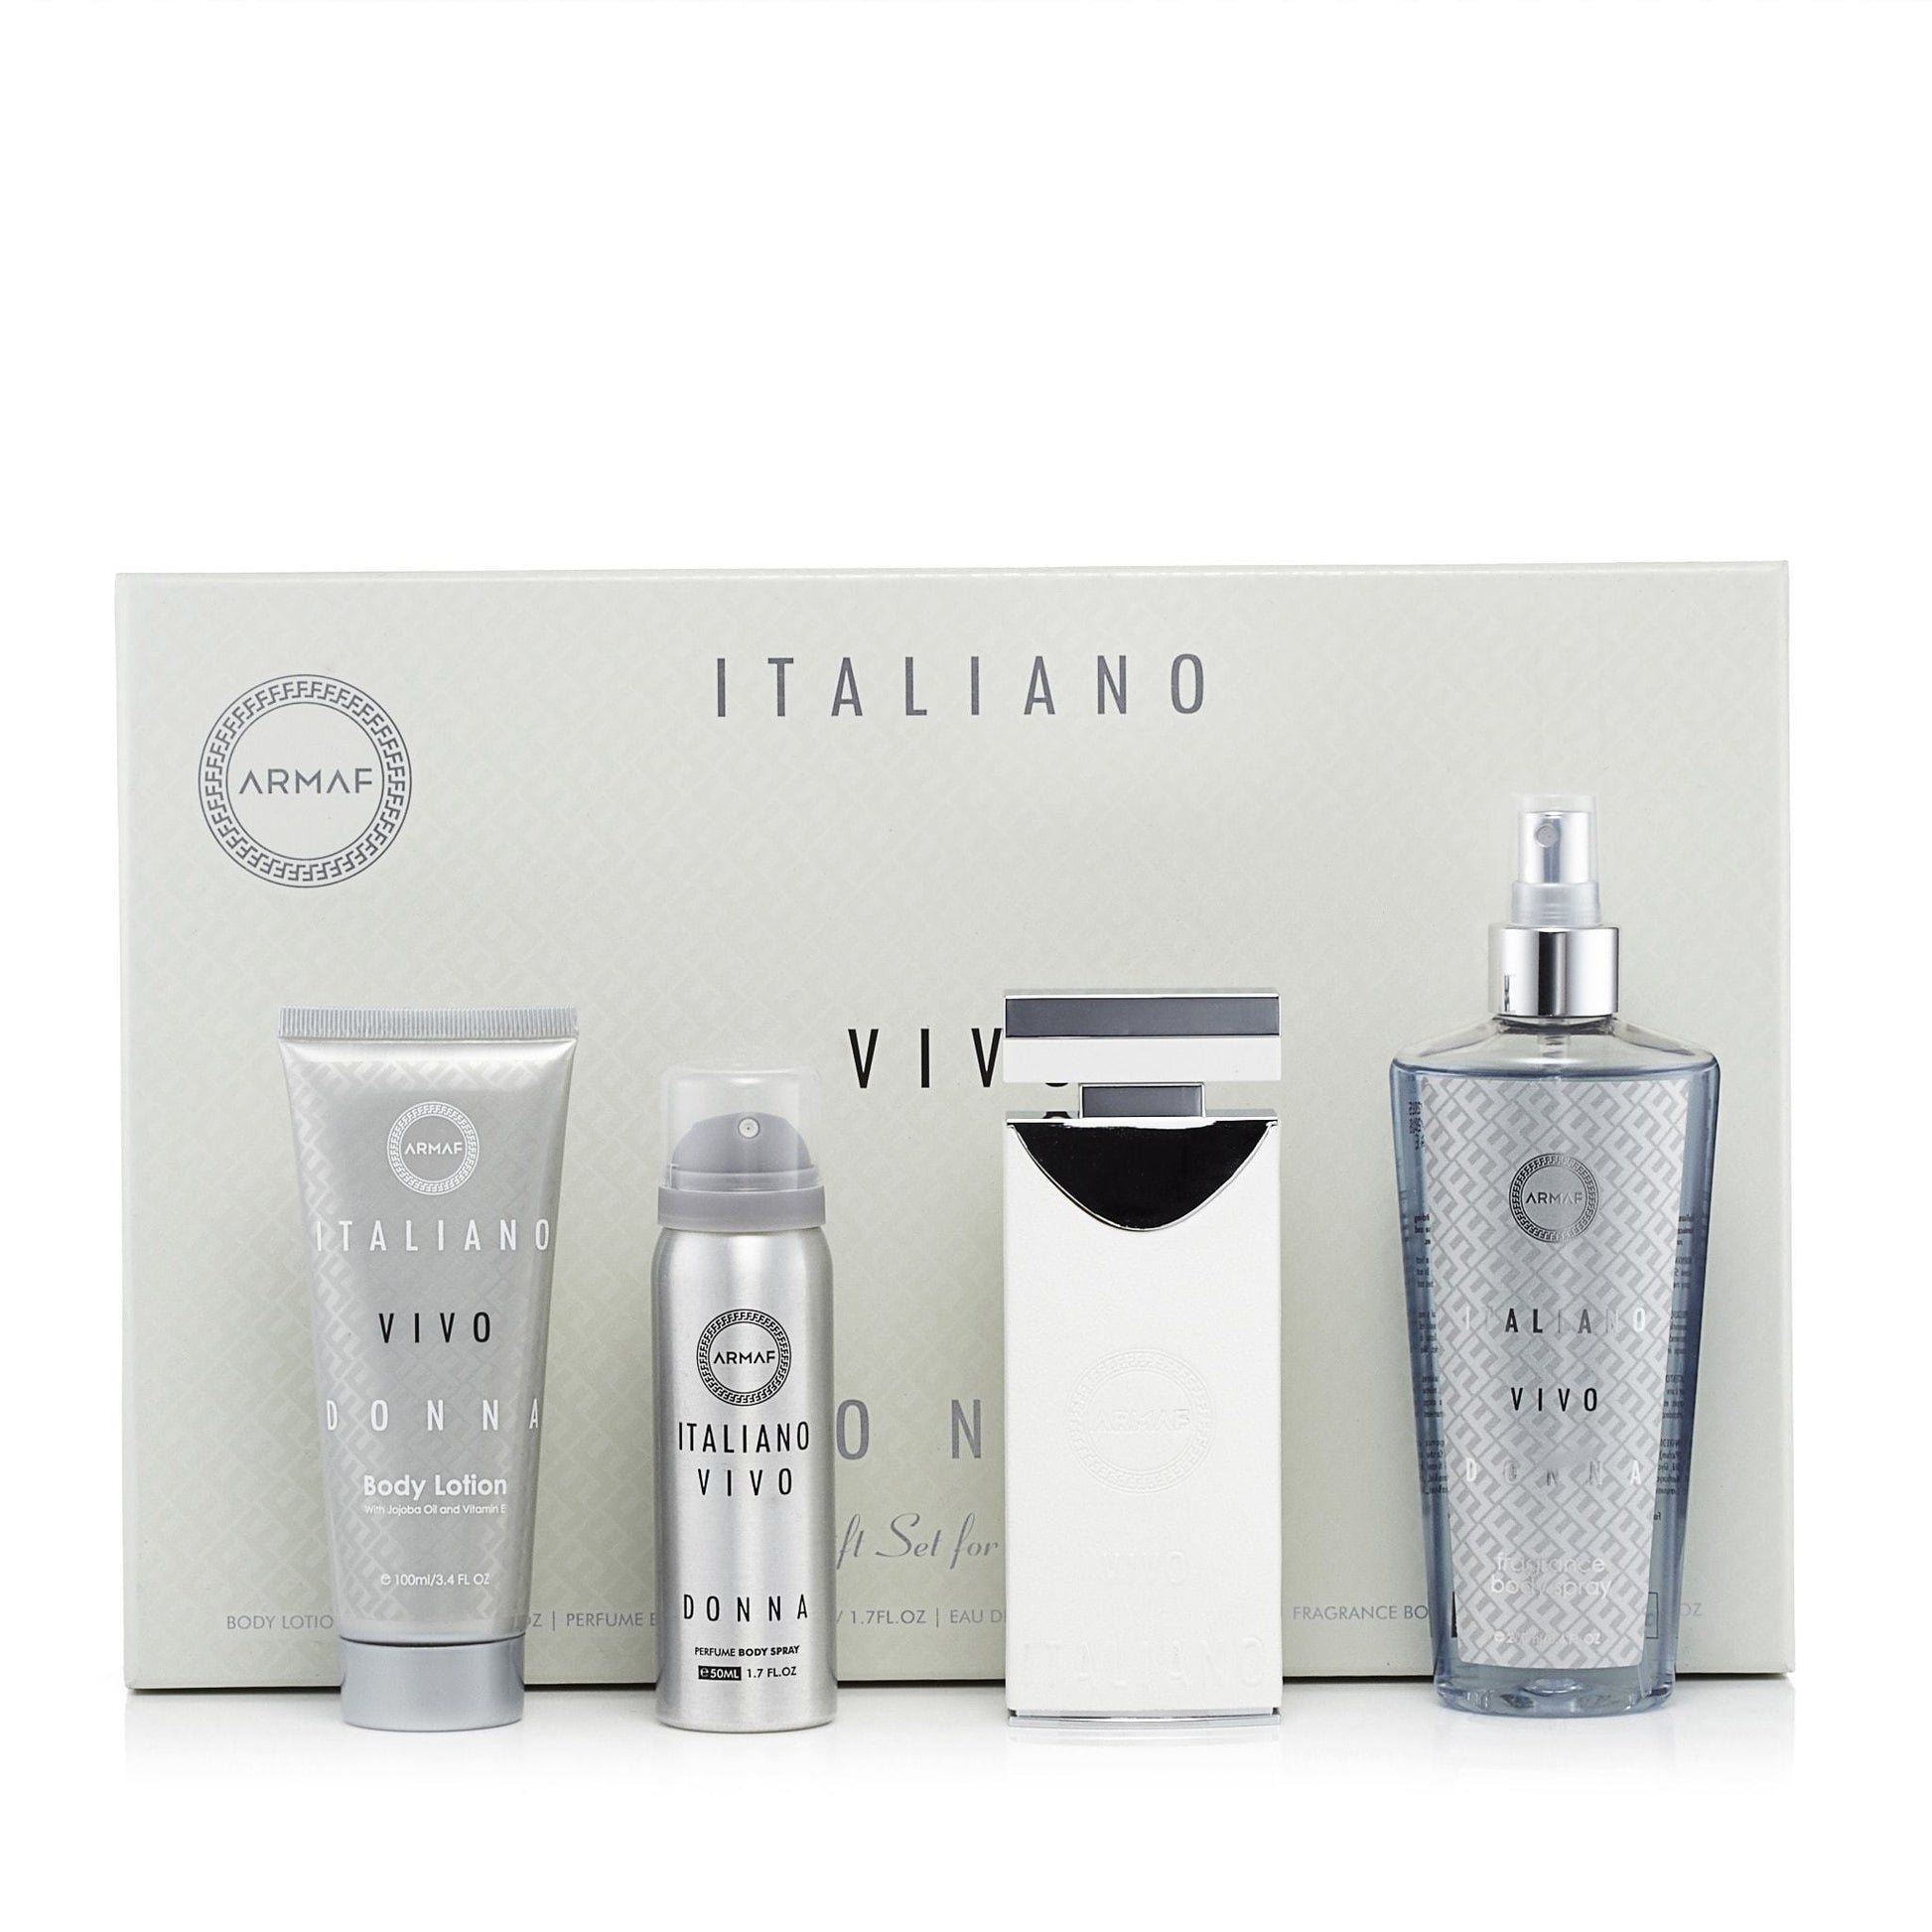 Italiano Vivo Gift Set for Women, Product image 2